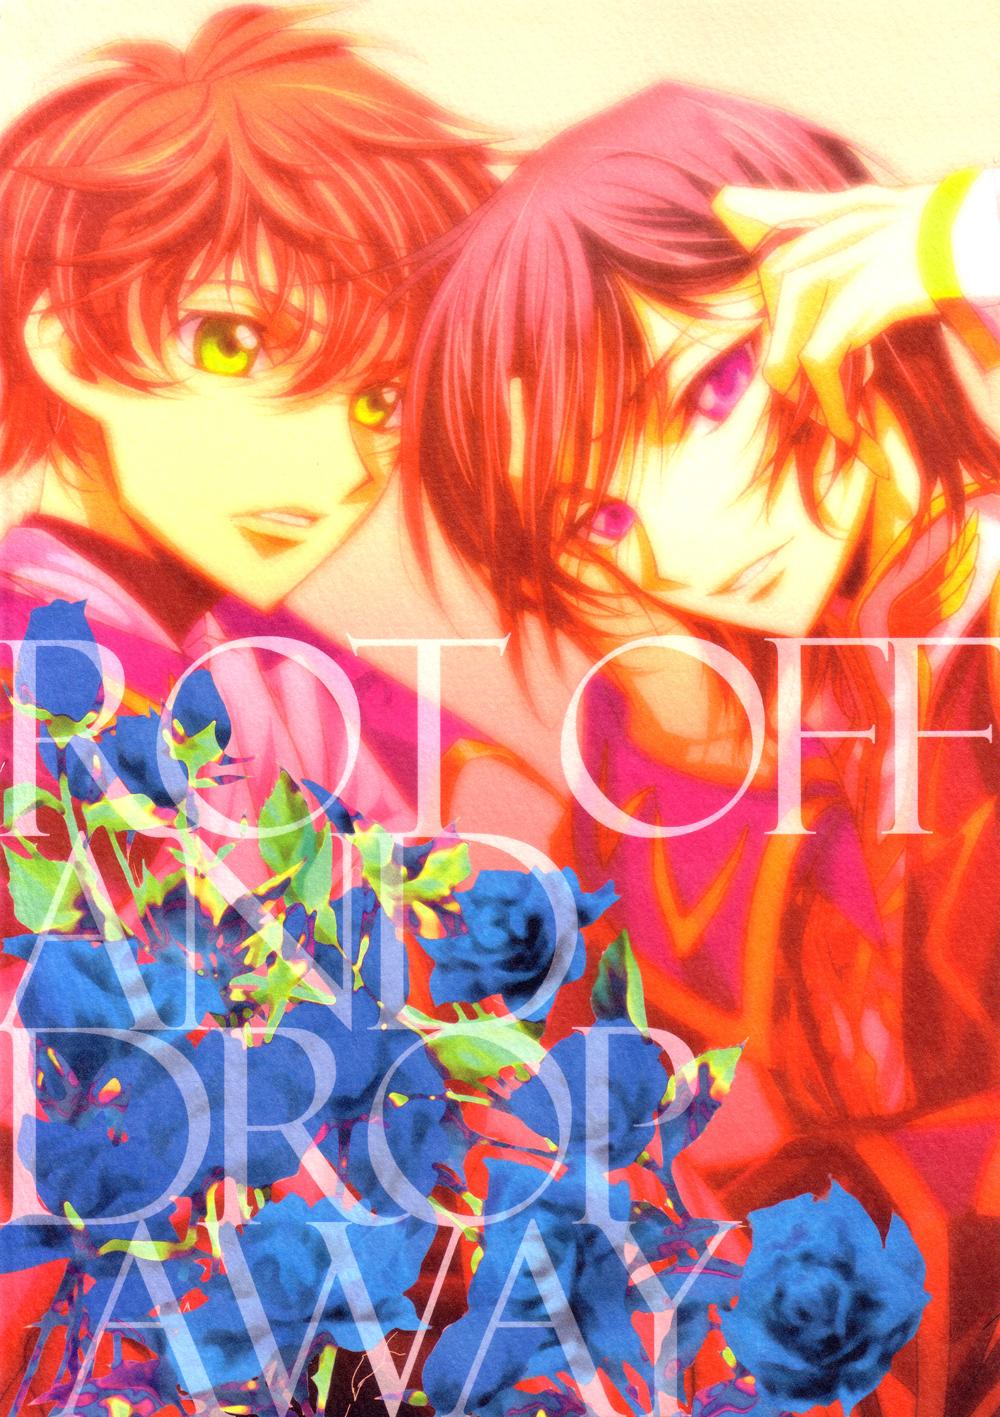 Kuchiru Chiru Ochiru - Rot off and Drop away 24